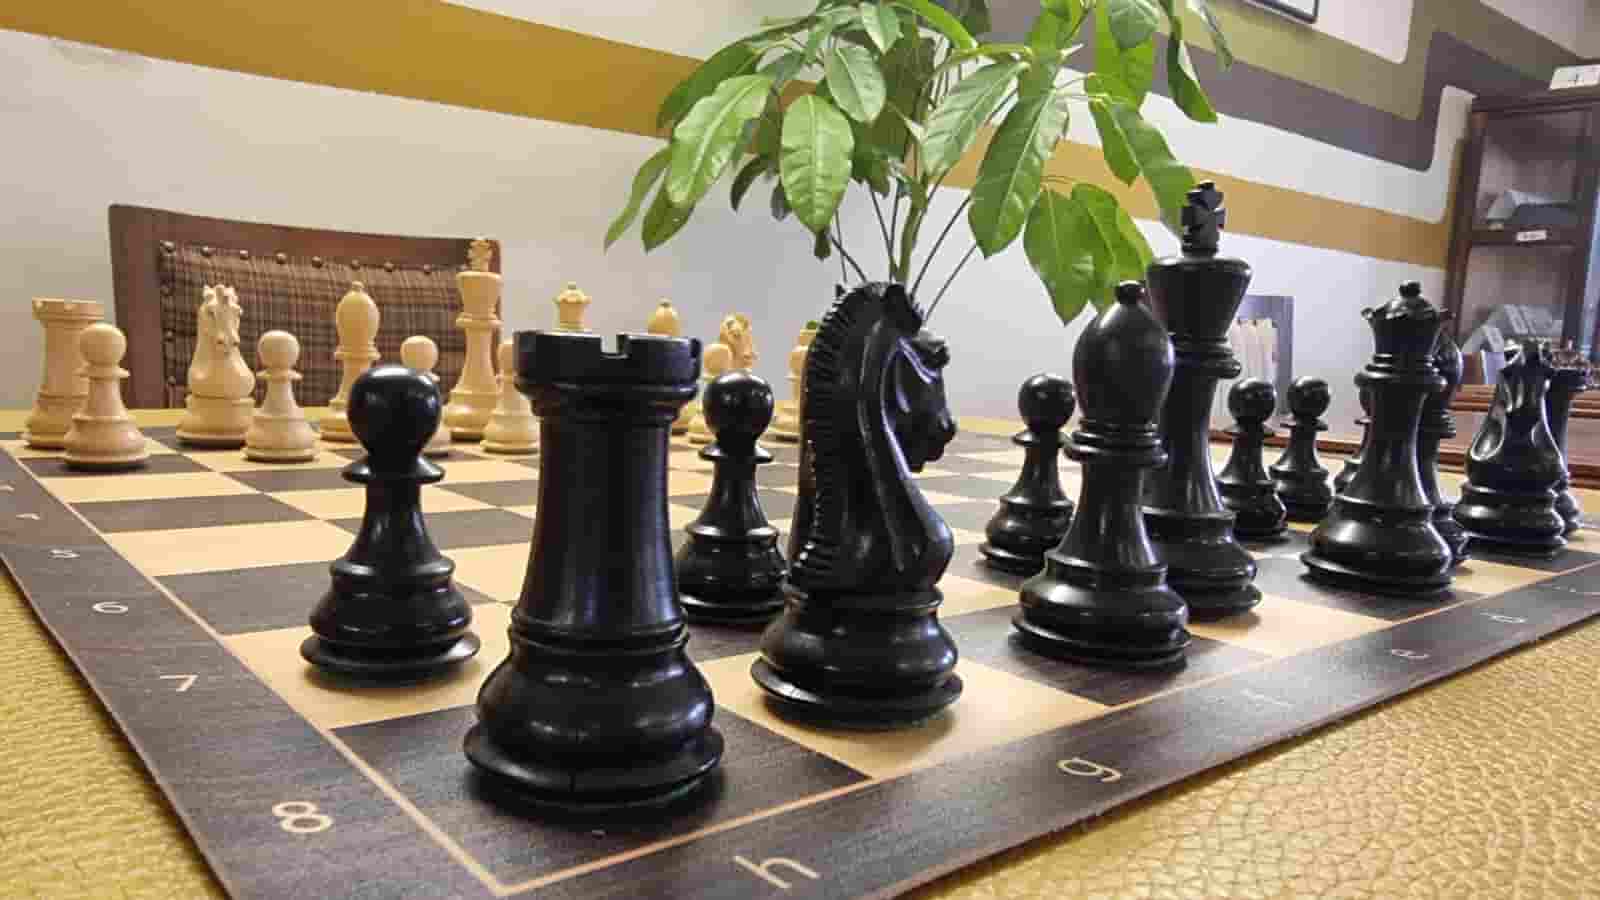 Torneo de ajedrez en Bolivia